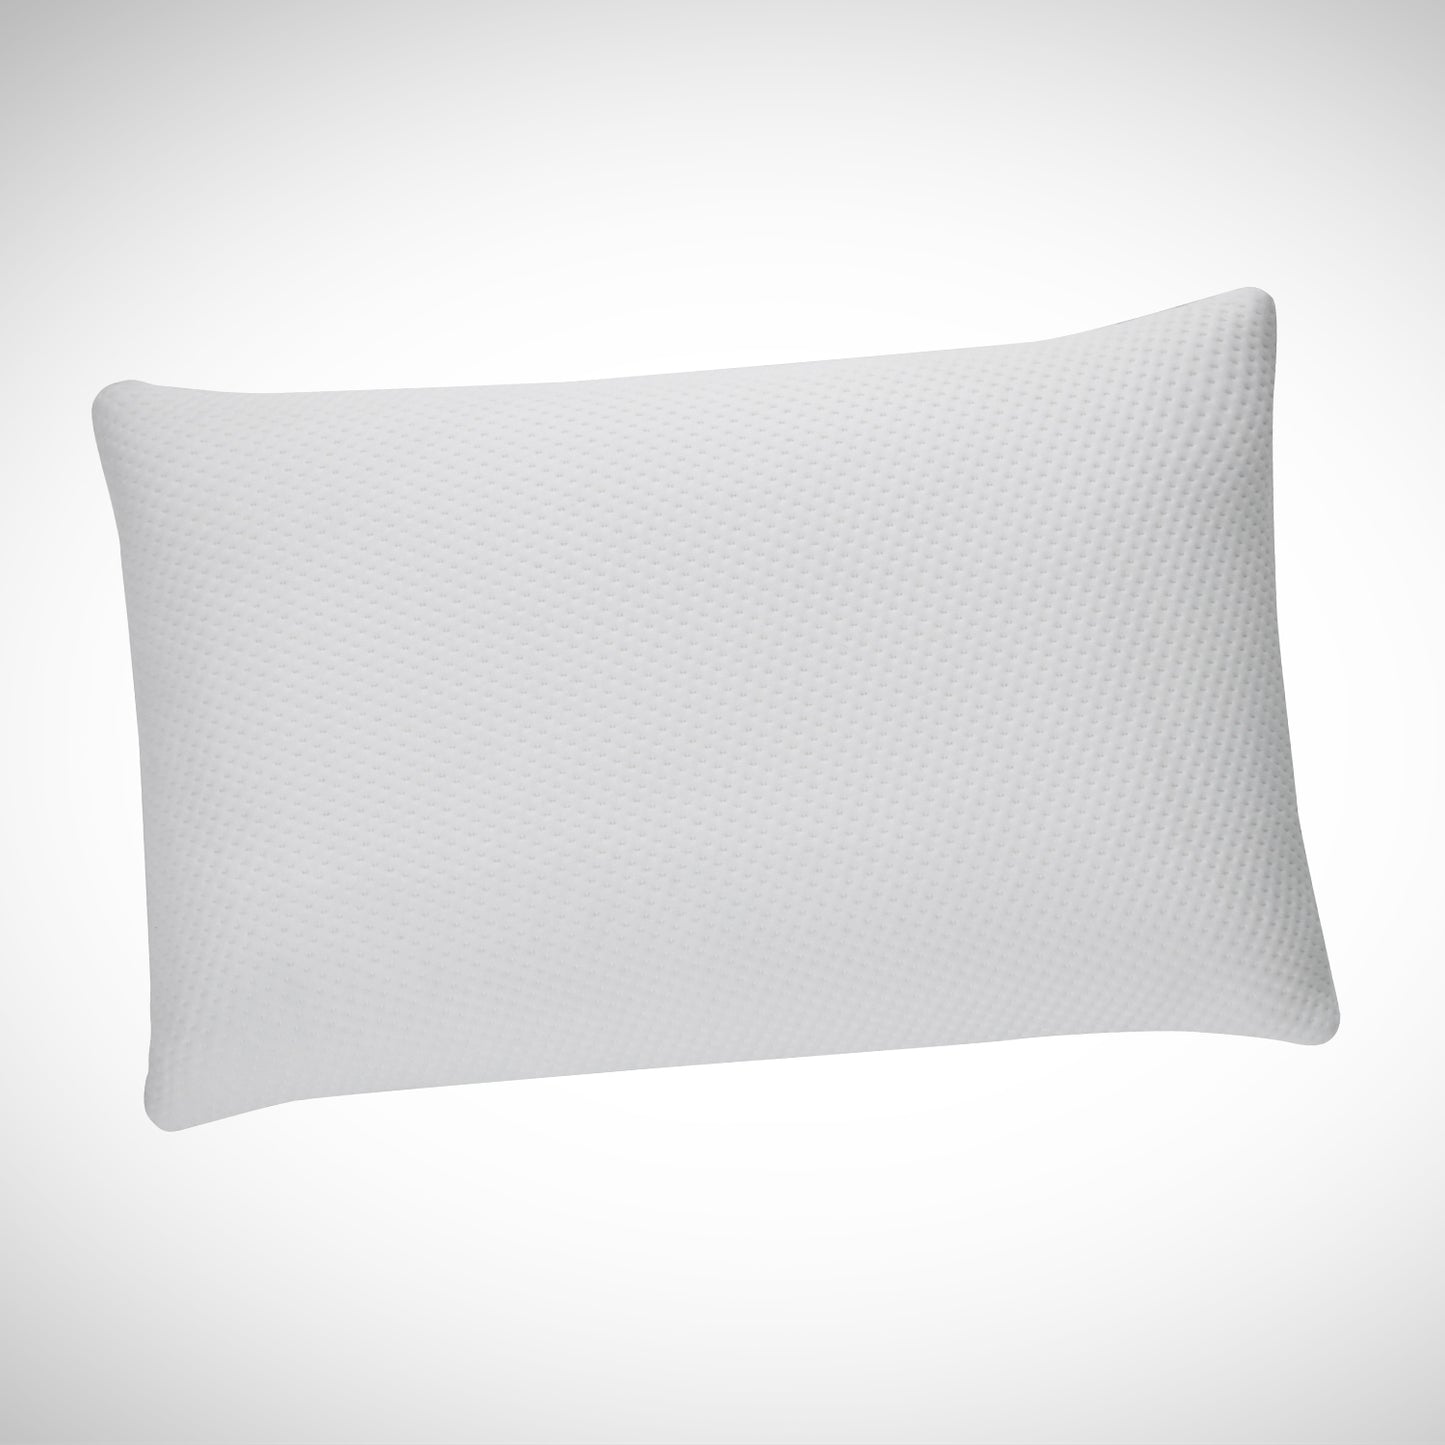 Off-Road Bedding Shredded Foam Cooling Pillow